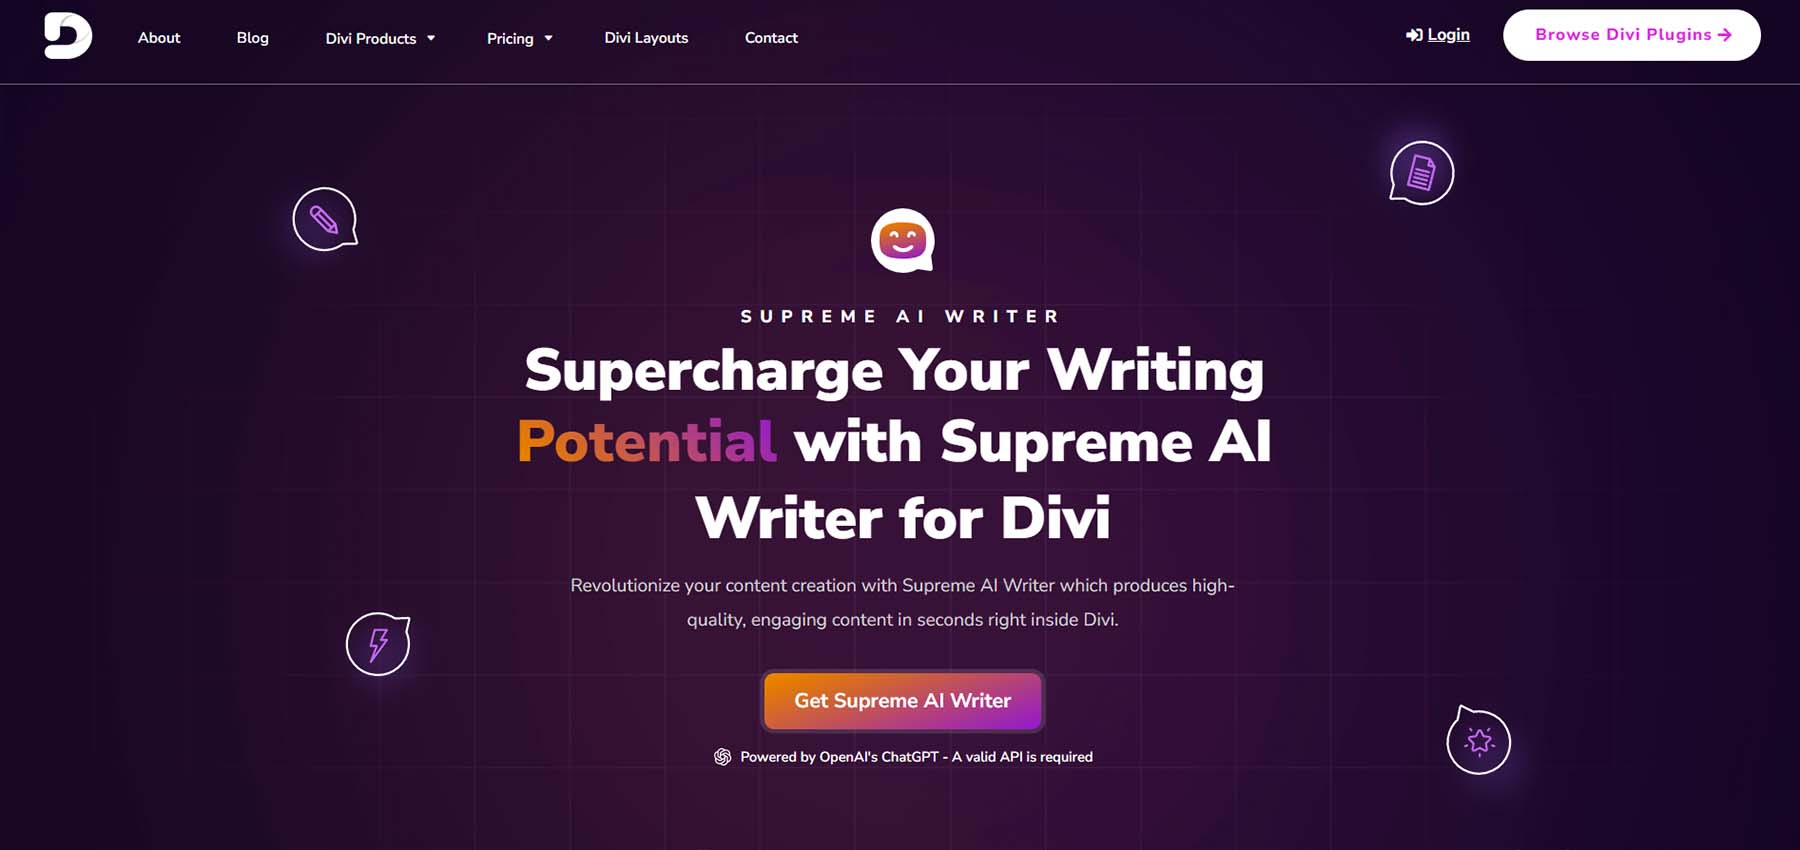 Supreme AI Writer, a Divi Marketplace product